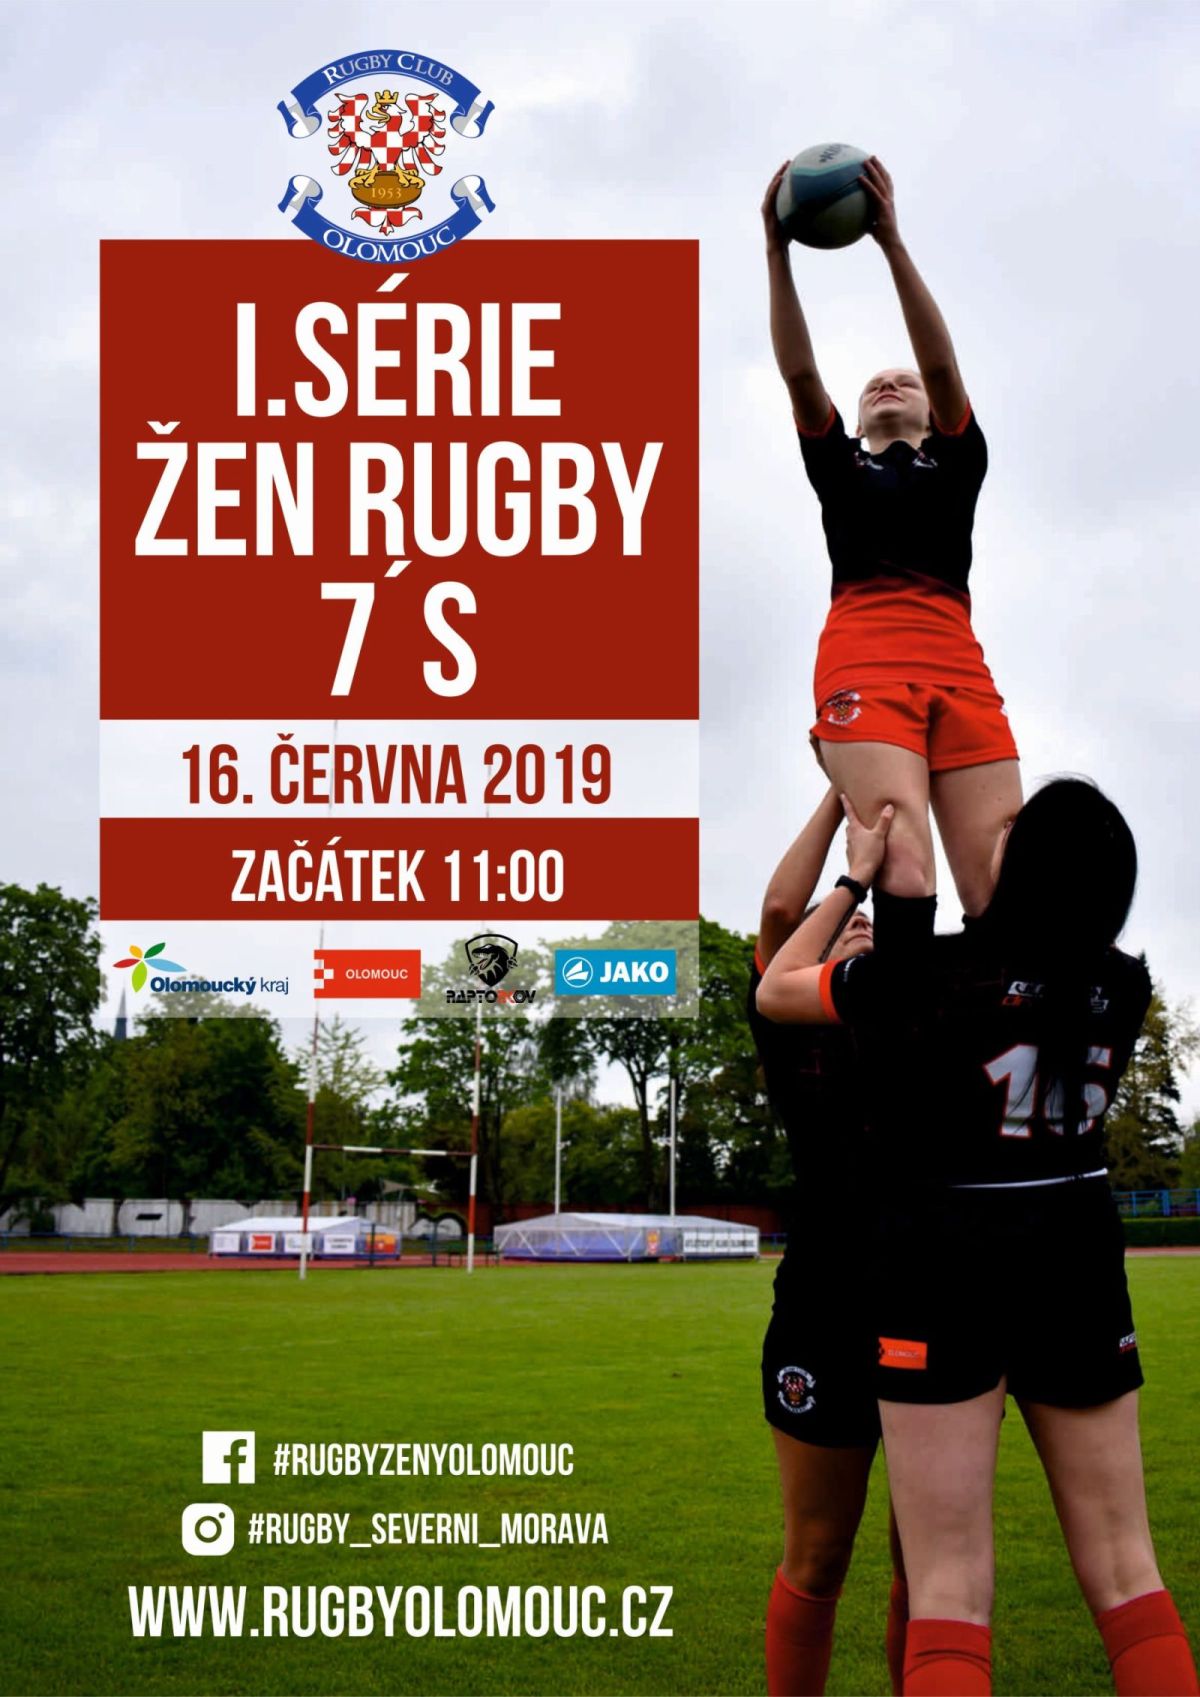 I. Serie rugby zen 7s net_.jpg